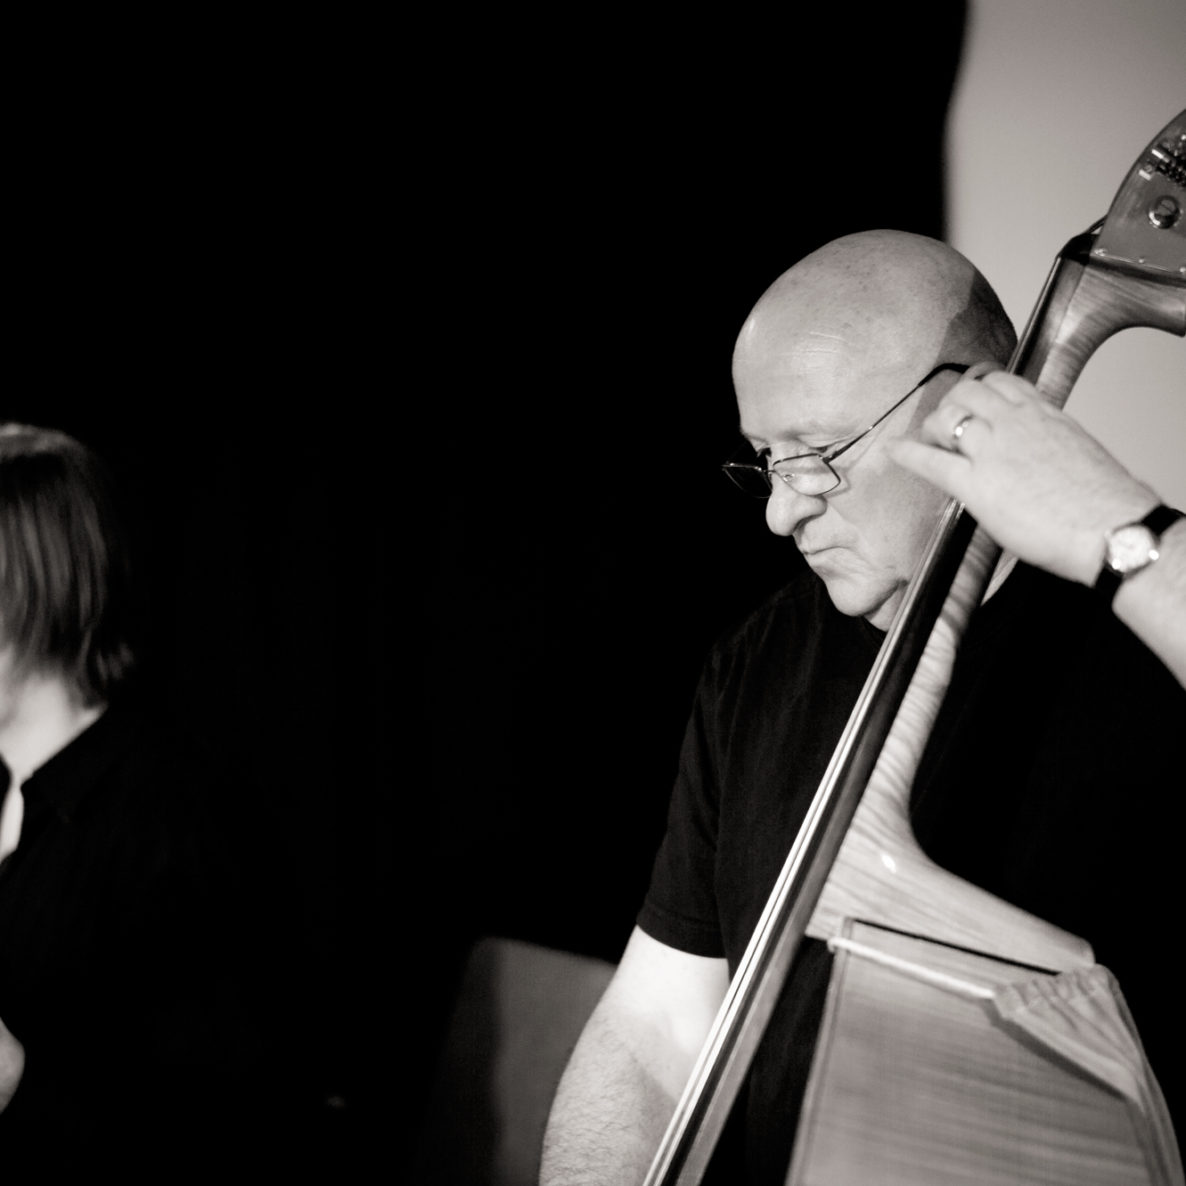 Gavin Bryars in profile playing a cello